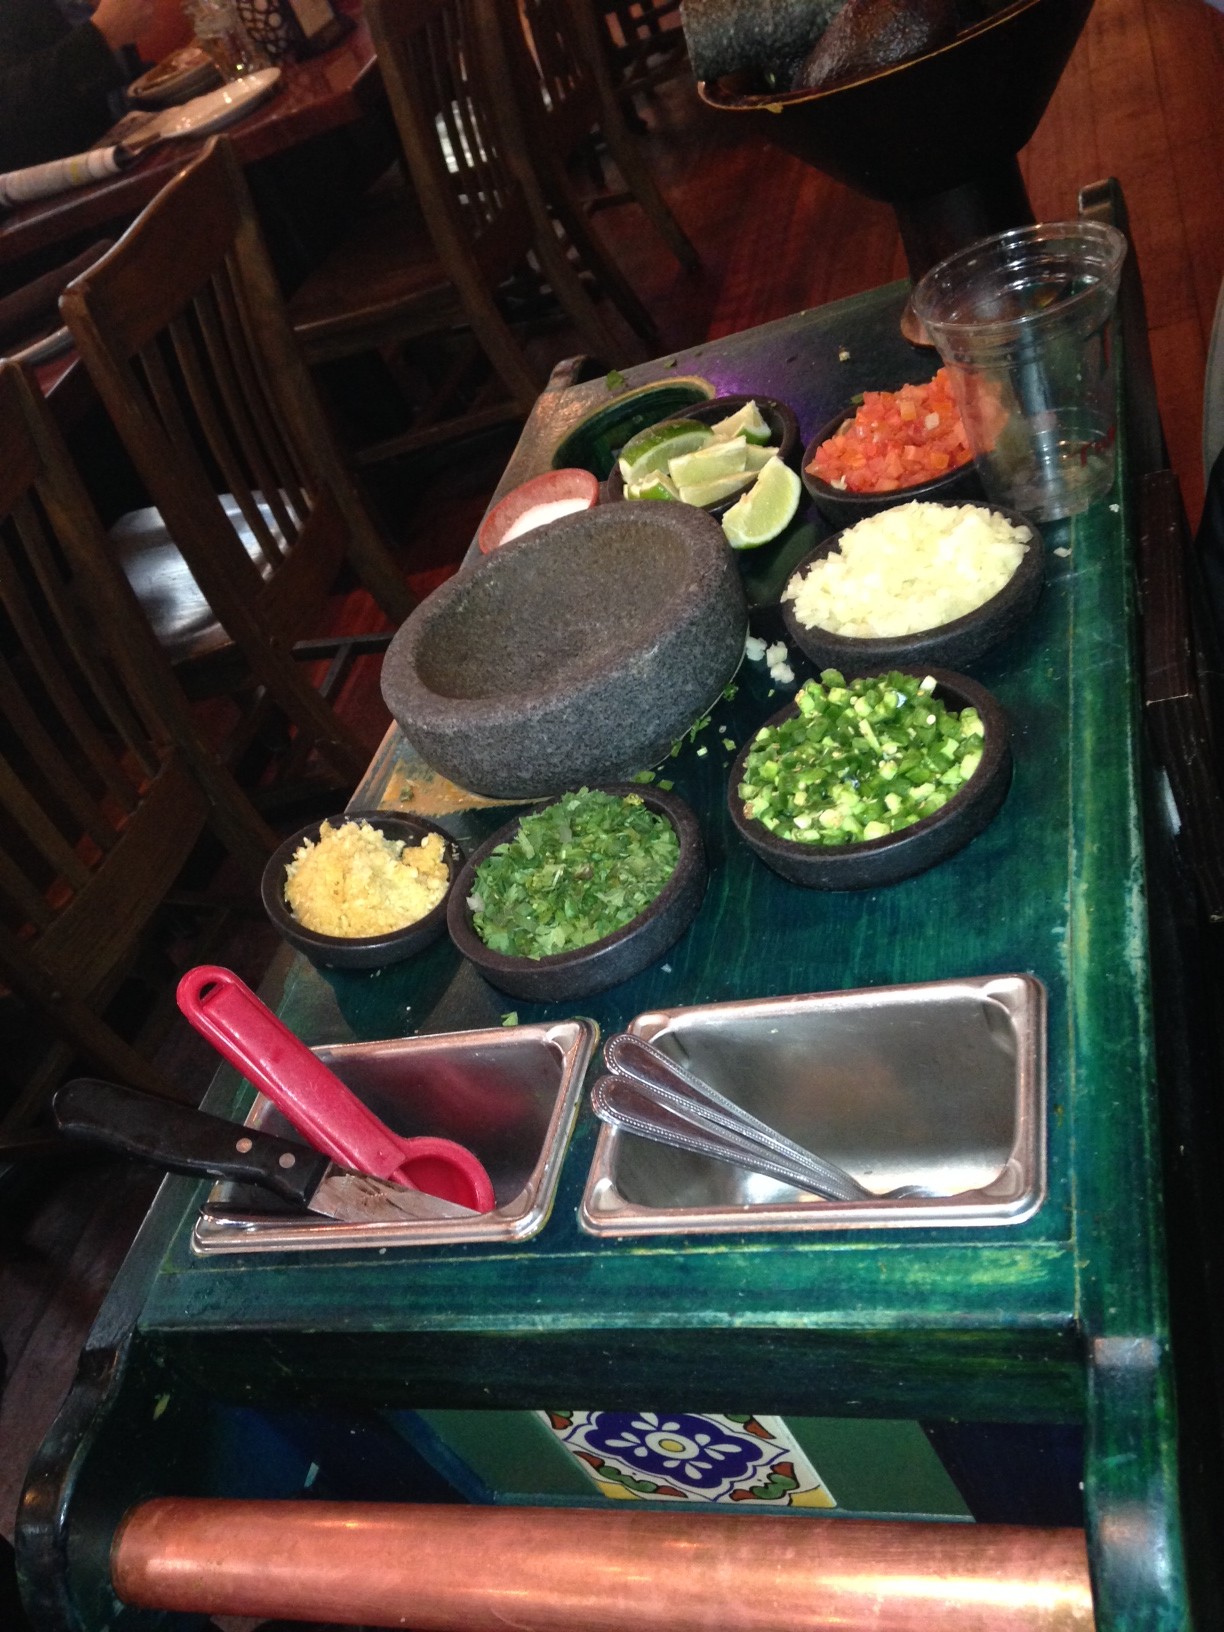 Tableside Guacamole ingredients at Salsa 17 - Arlington Heights, IL - Dec 2013